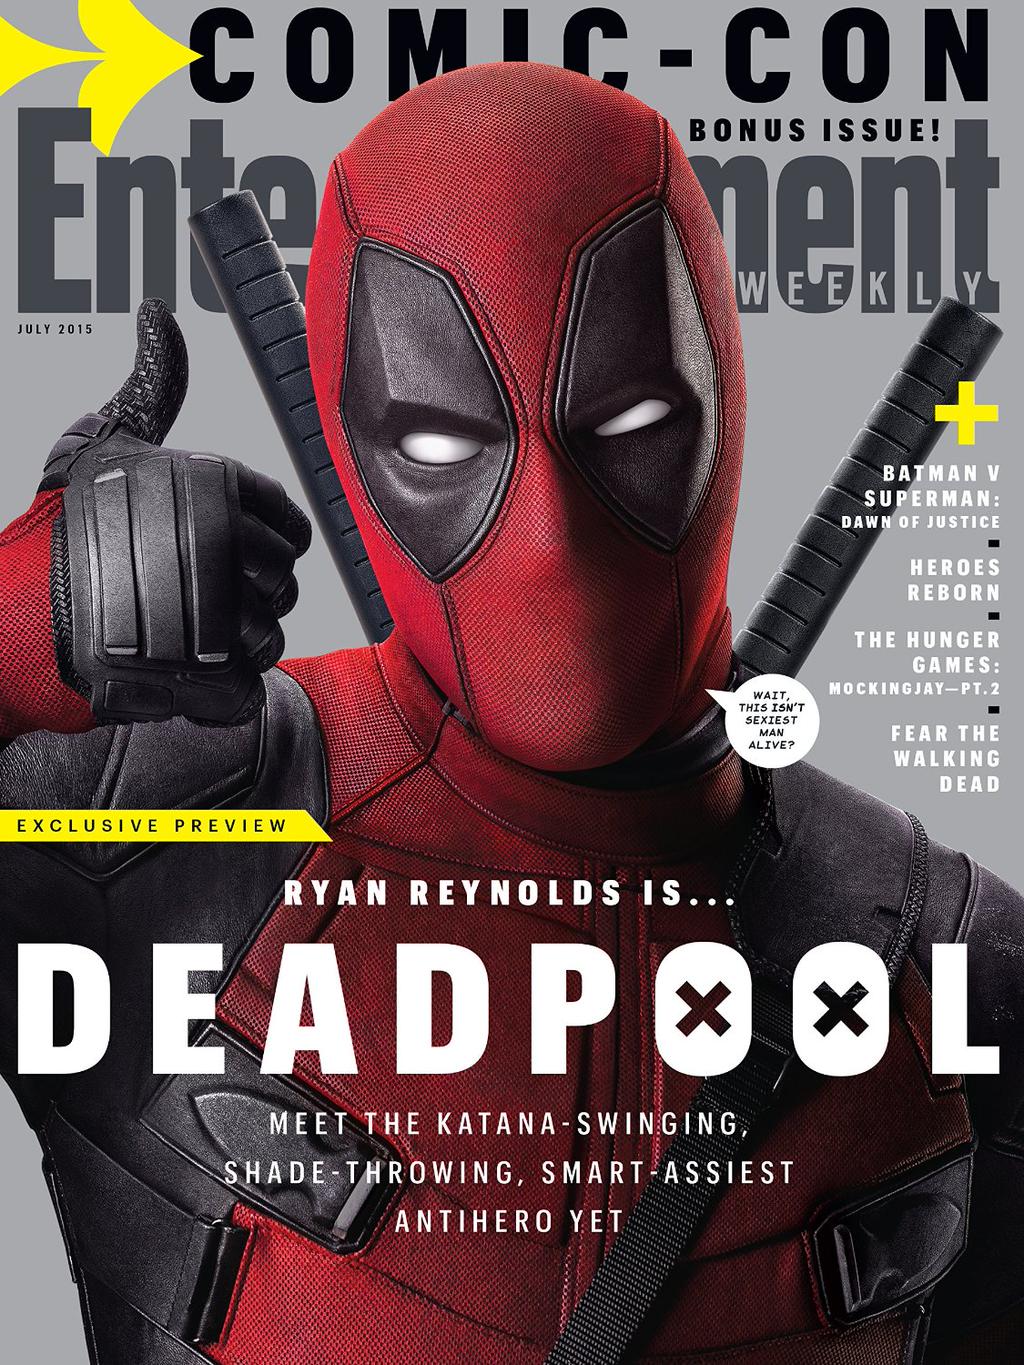 DEADP⊙⊙L, the sexiest man alive portada de Entertainment Weekly